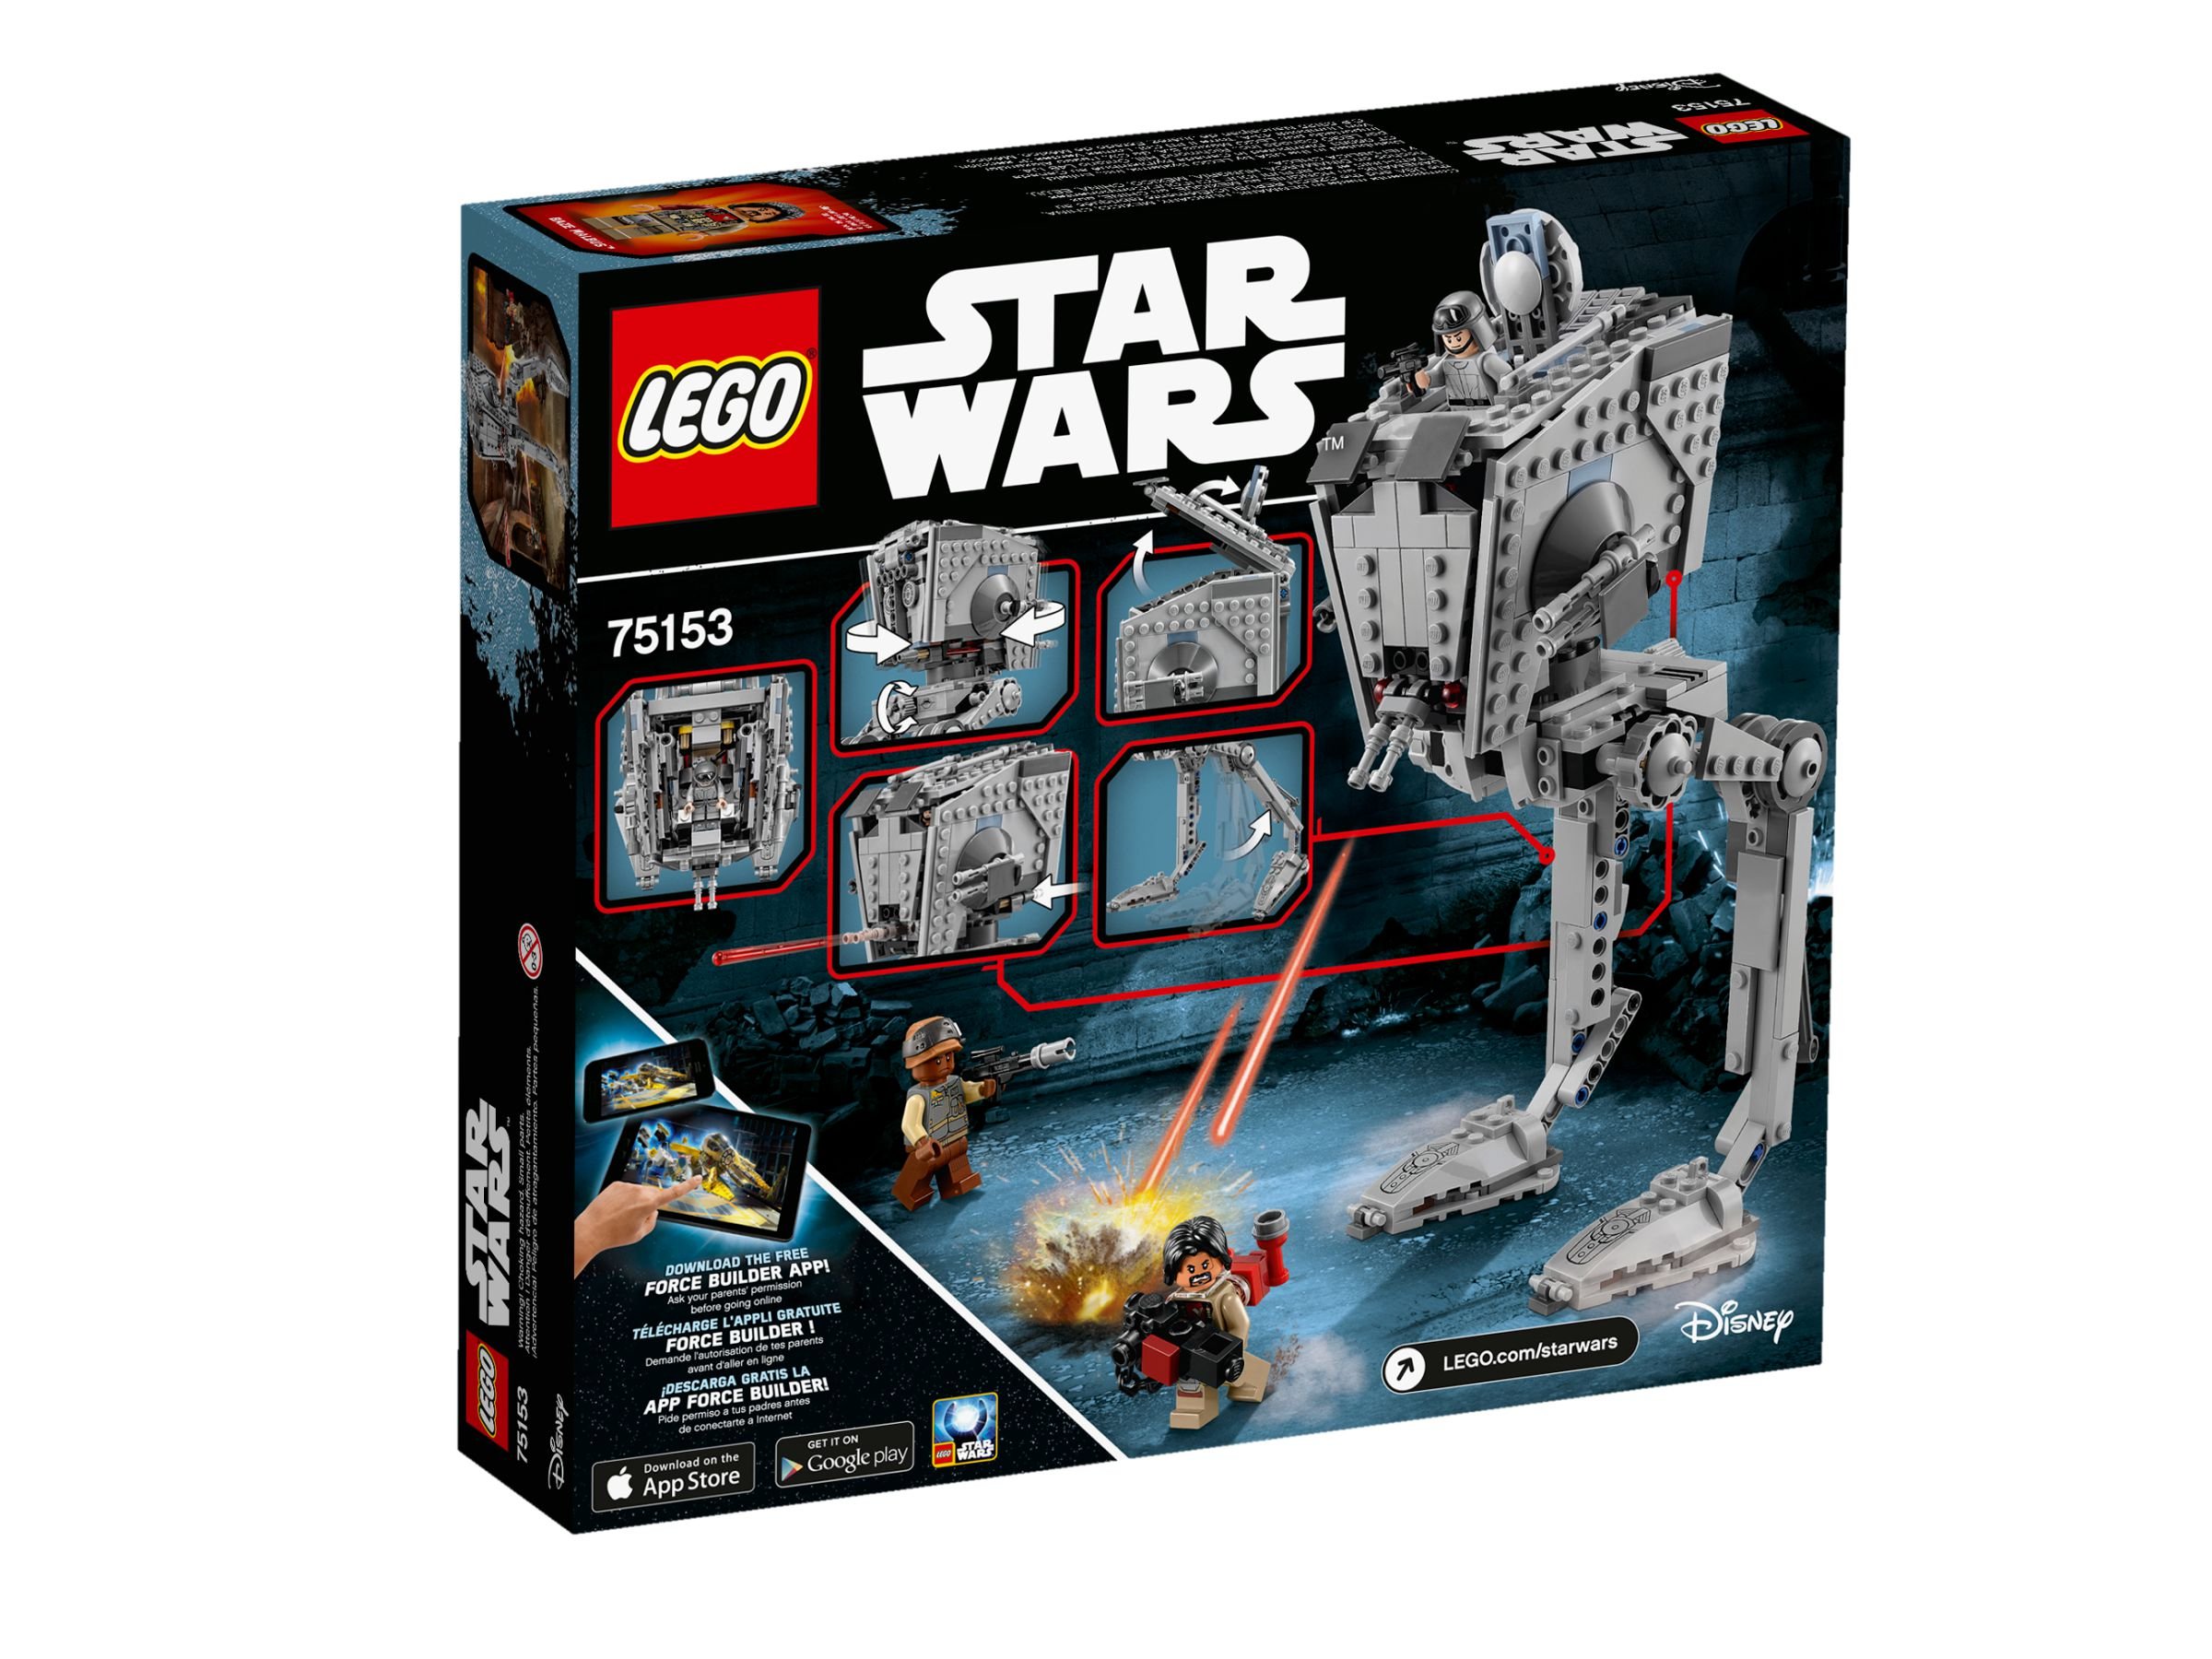 LEGO Star Wars 75153 AT-ST™ Walker LEGO_75153_alt1.jpg